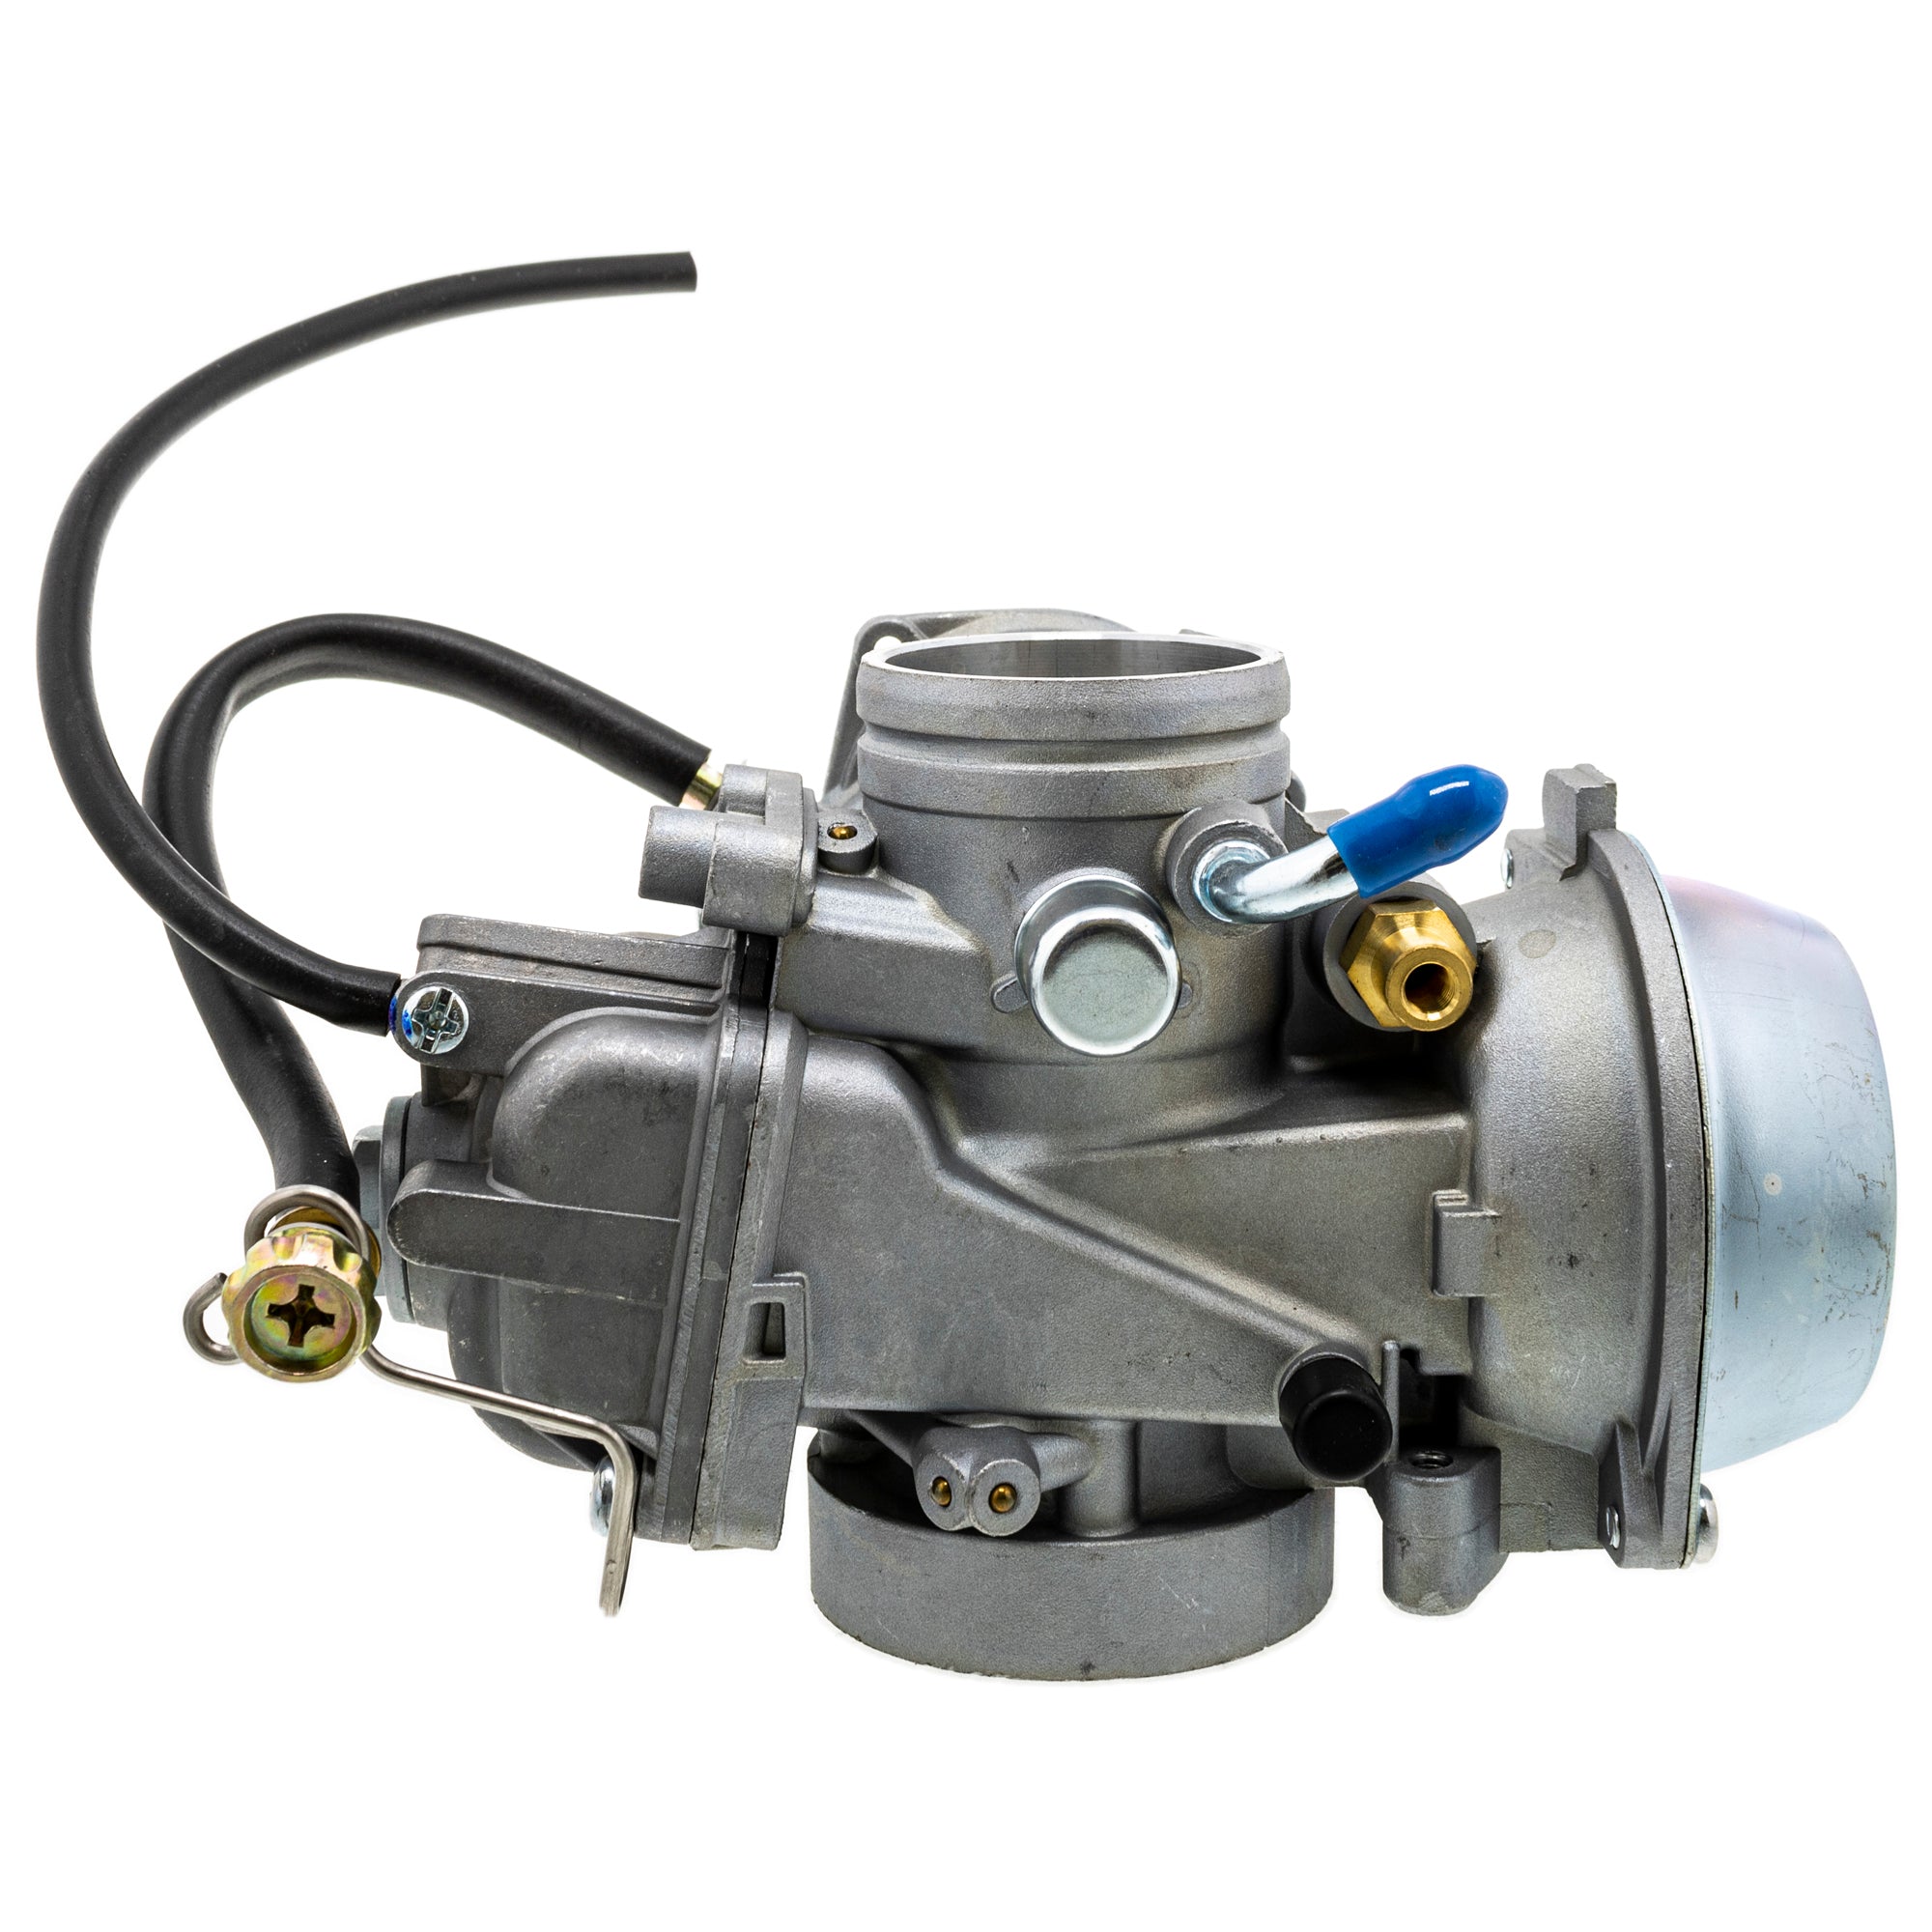 Carburetor Throttle Cable Kit for Polaris Sportsman Scrambler Worker